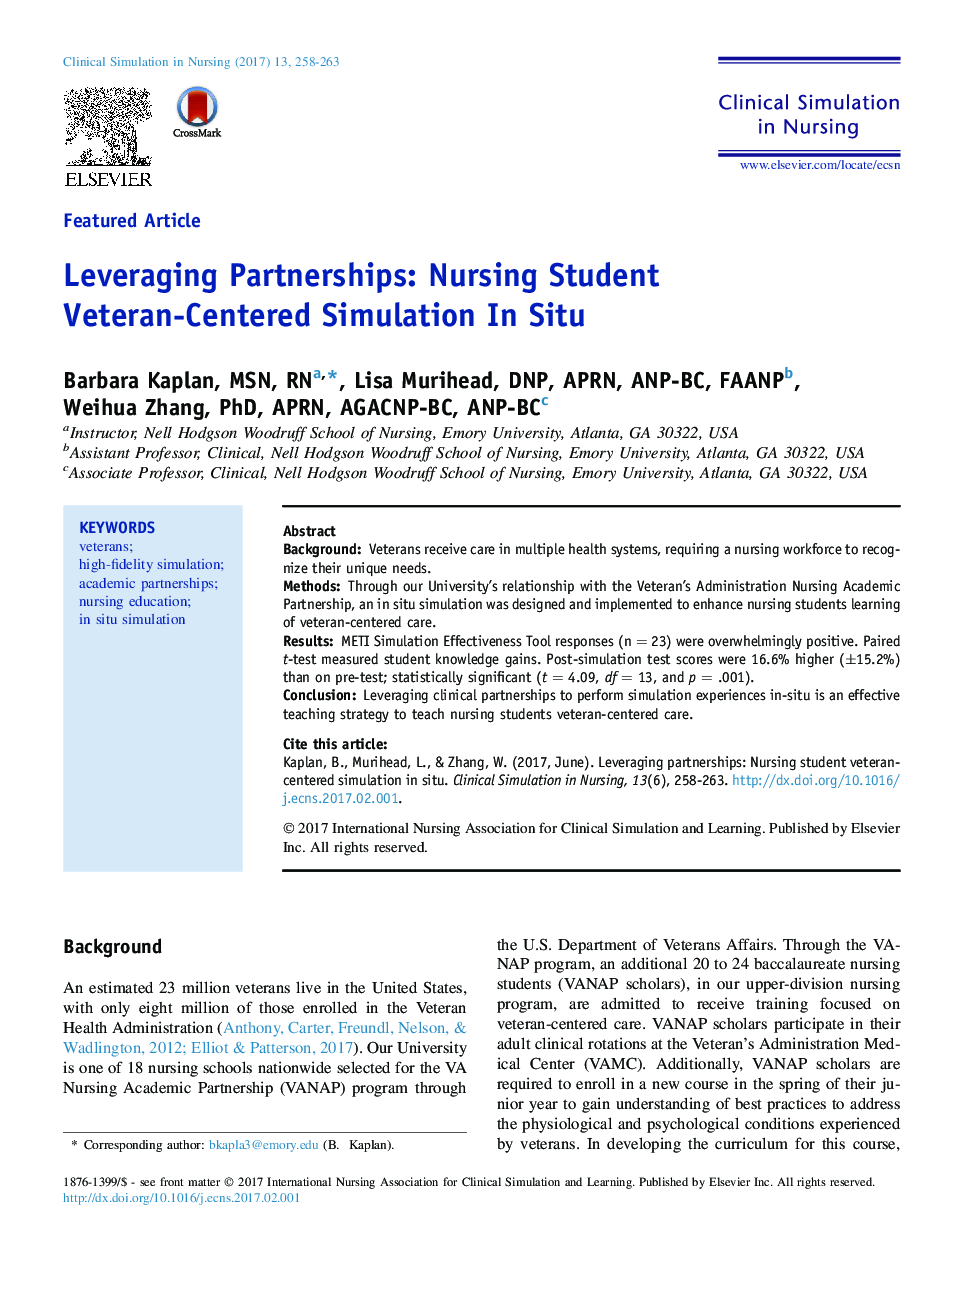 Leveraging Partnerships: Nursing Student Veteran-Centered Simulation In Situ